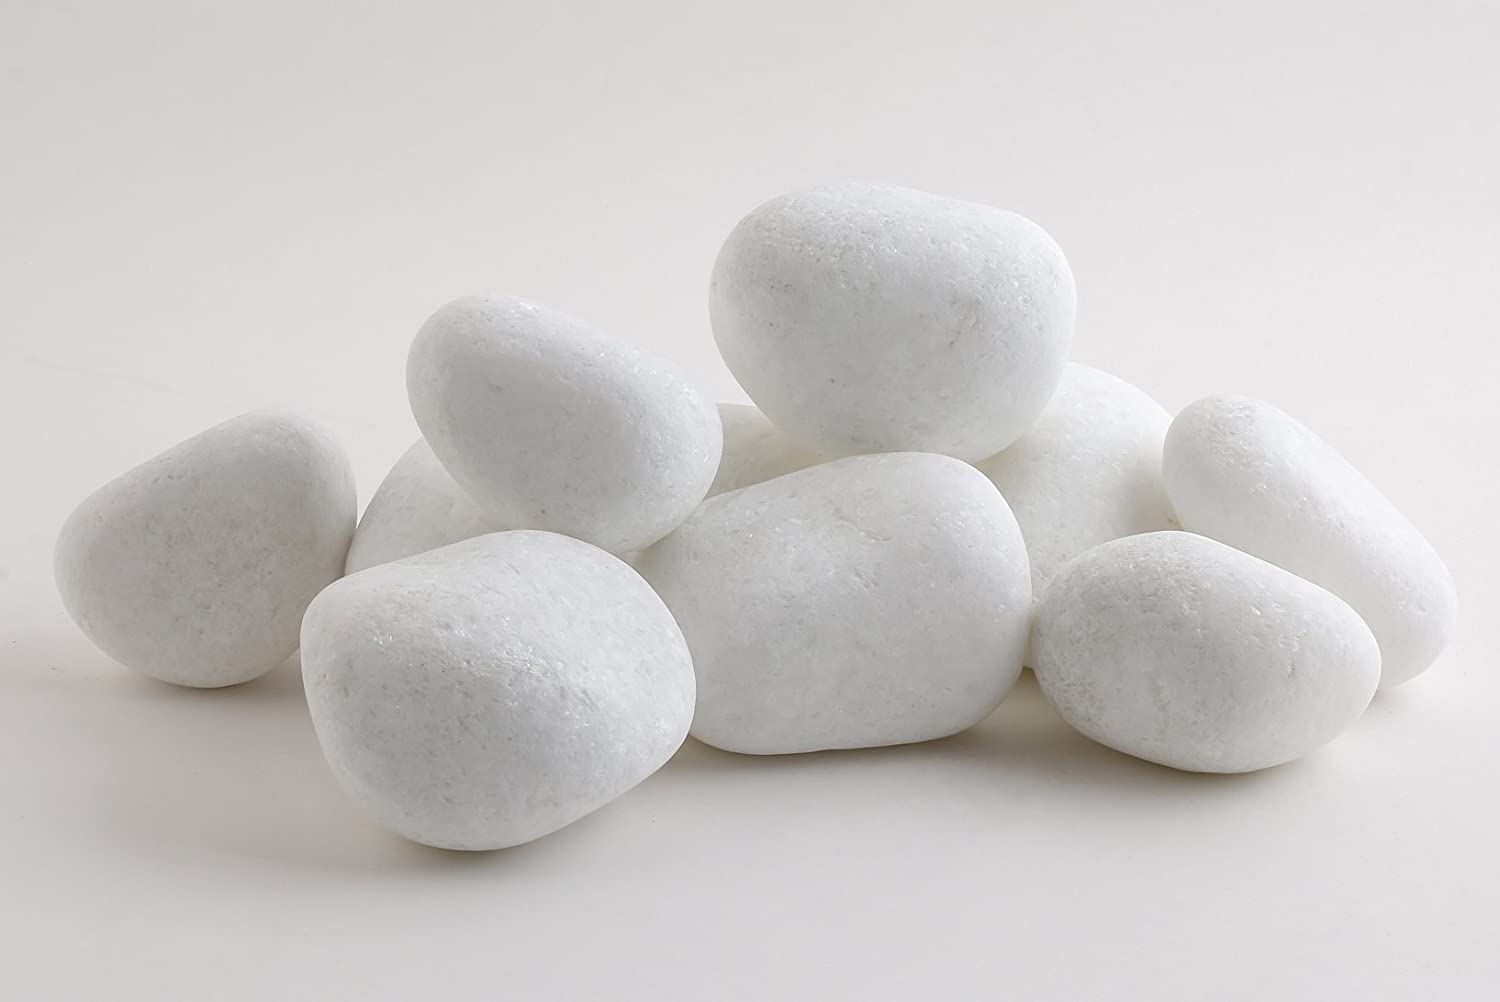 StonesForever Snow-white Pebbles (5 Kgs, 2-3 Inches)